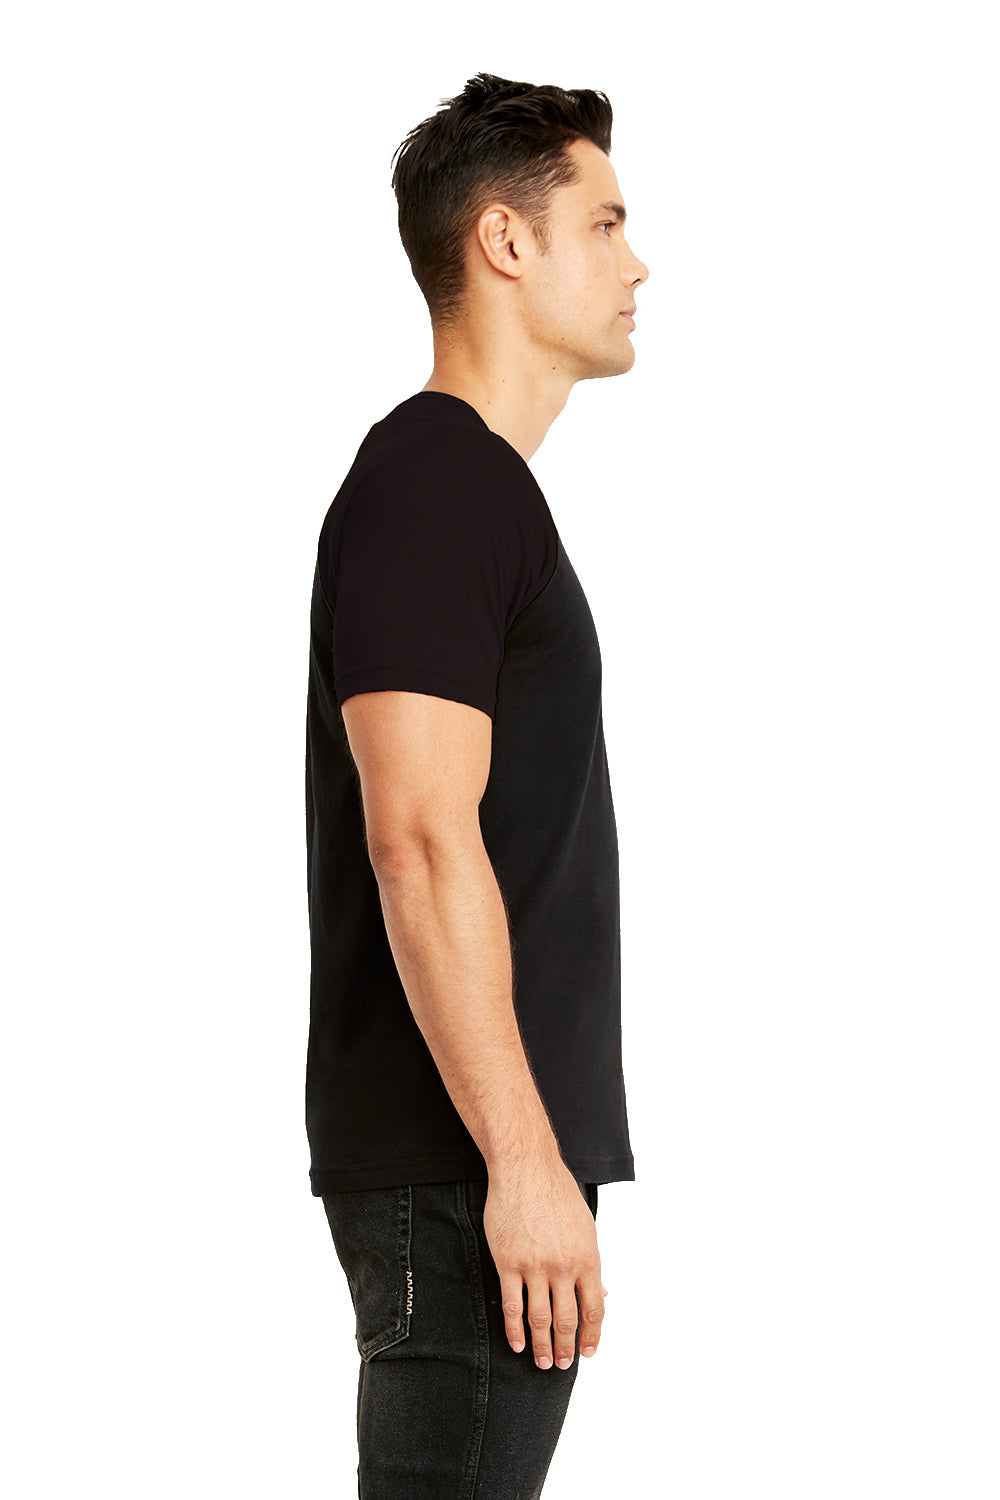 Next Level N3650 Mens Fine Jersey Short Sleeve Crewneck T-Shirt Black Side